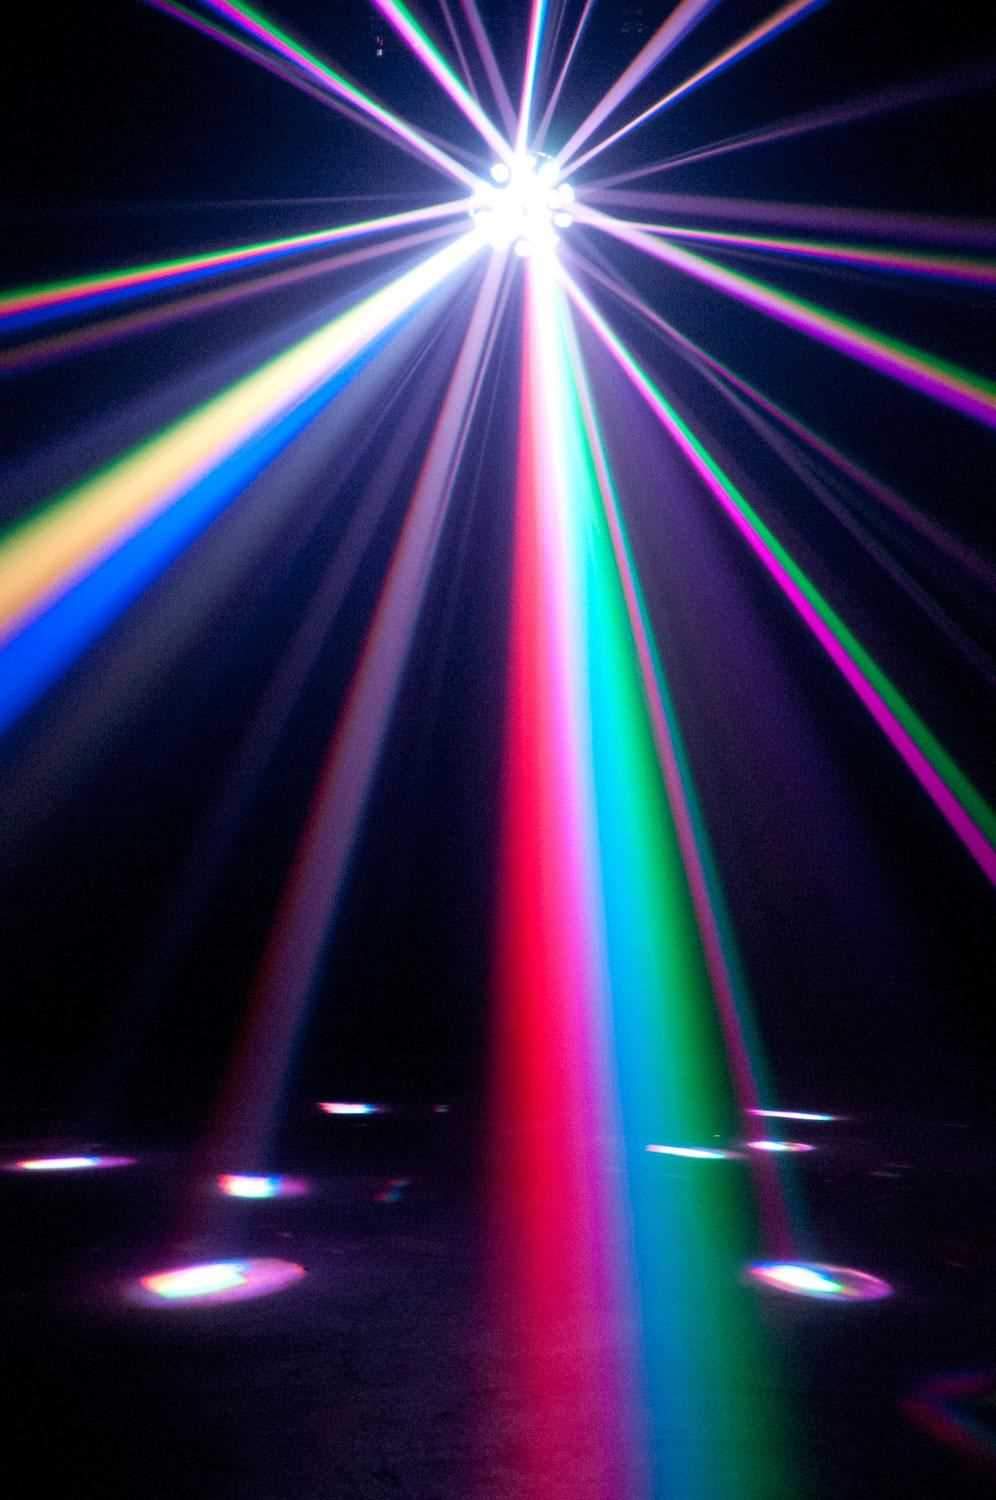 ADJ American DJ Vertigo HEX LED Moonflower LED Effect Light - PSSL ProSound and Stage Lighting